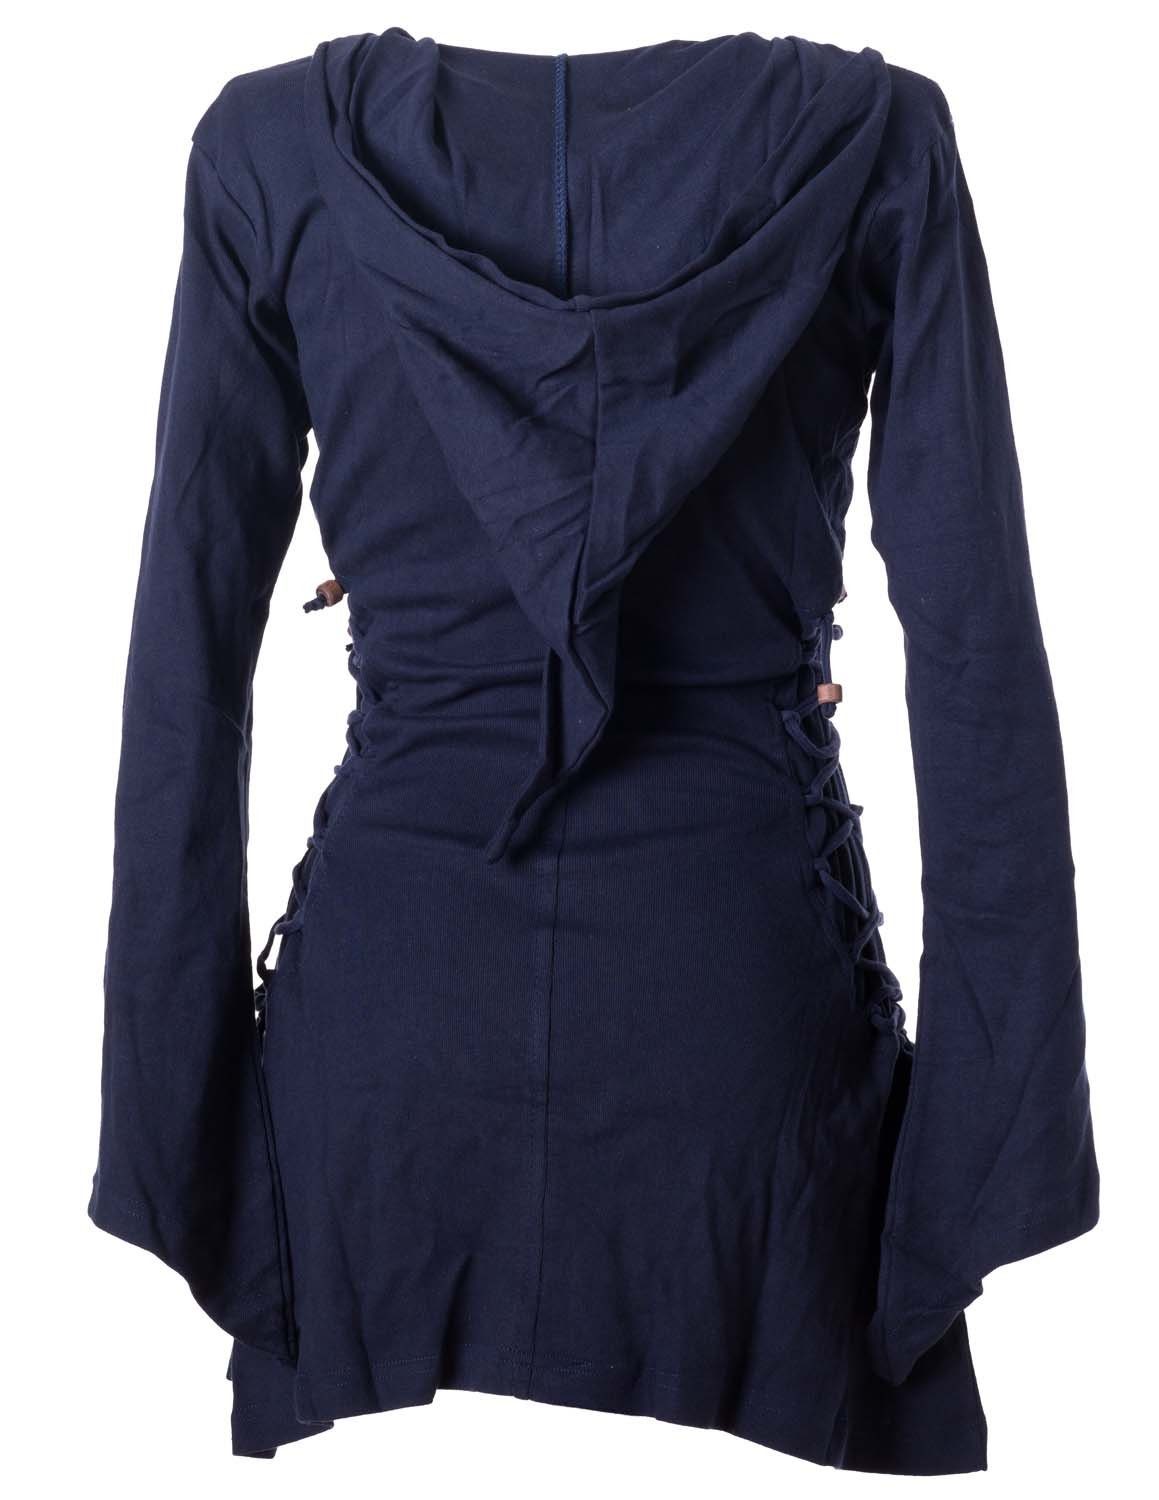 Vishes Zipfelkleid dunkelblau Elfenkleid mit Bändern zum Style Schnüren Gothik Ethno, Hoody, Zipfelkapuze